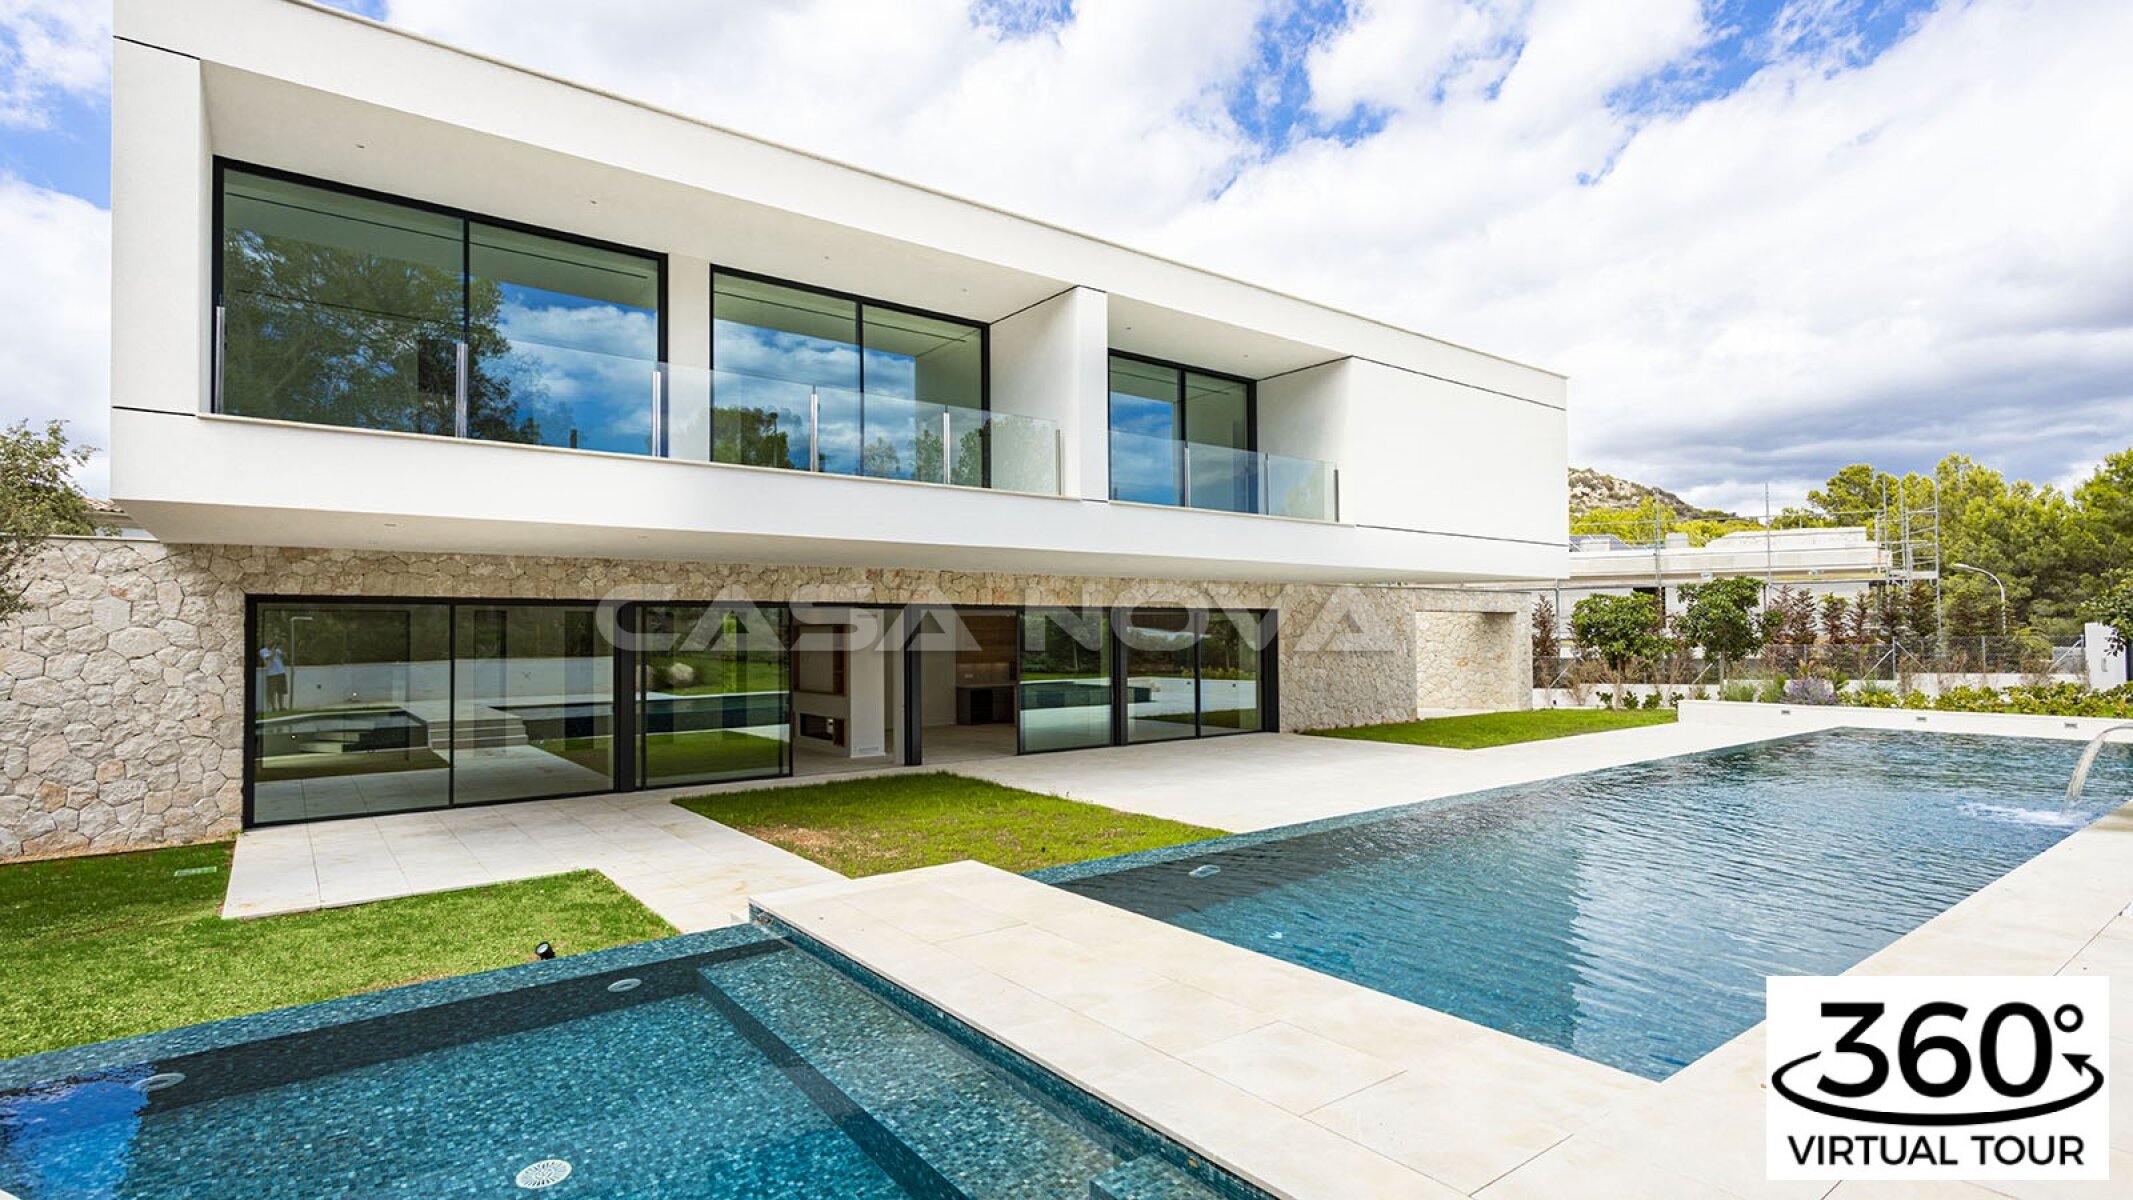 Exclusiva villa nueva Mallorca con piscina